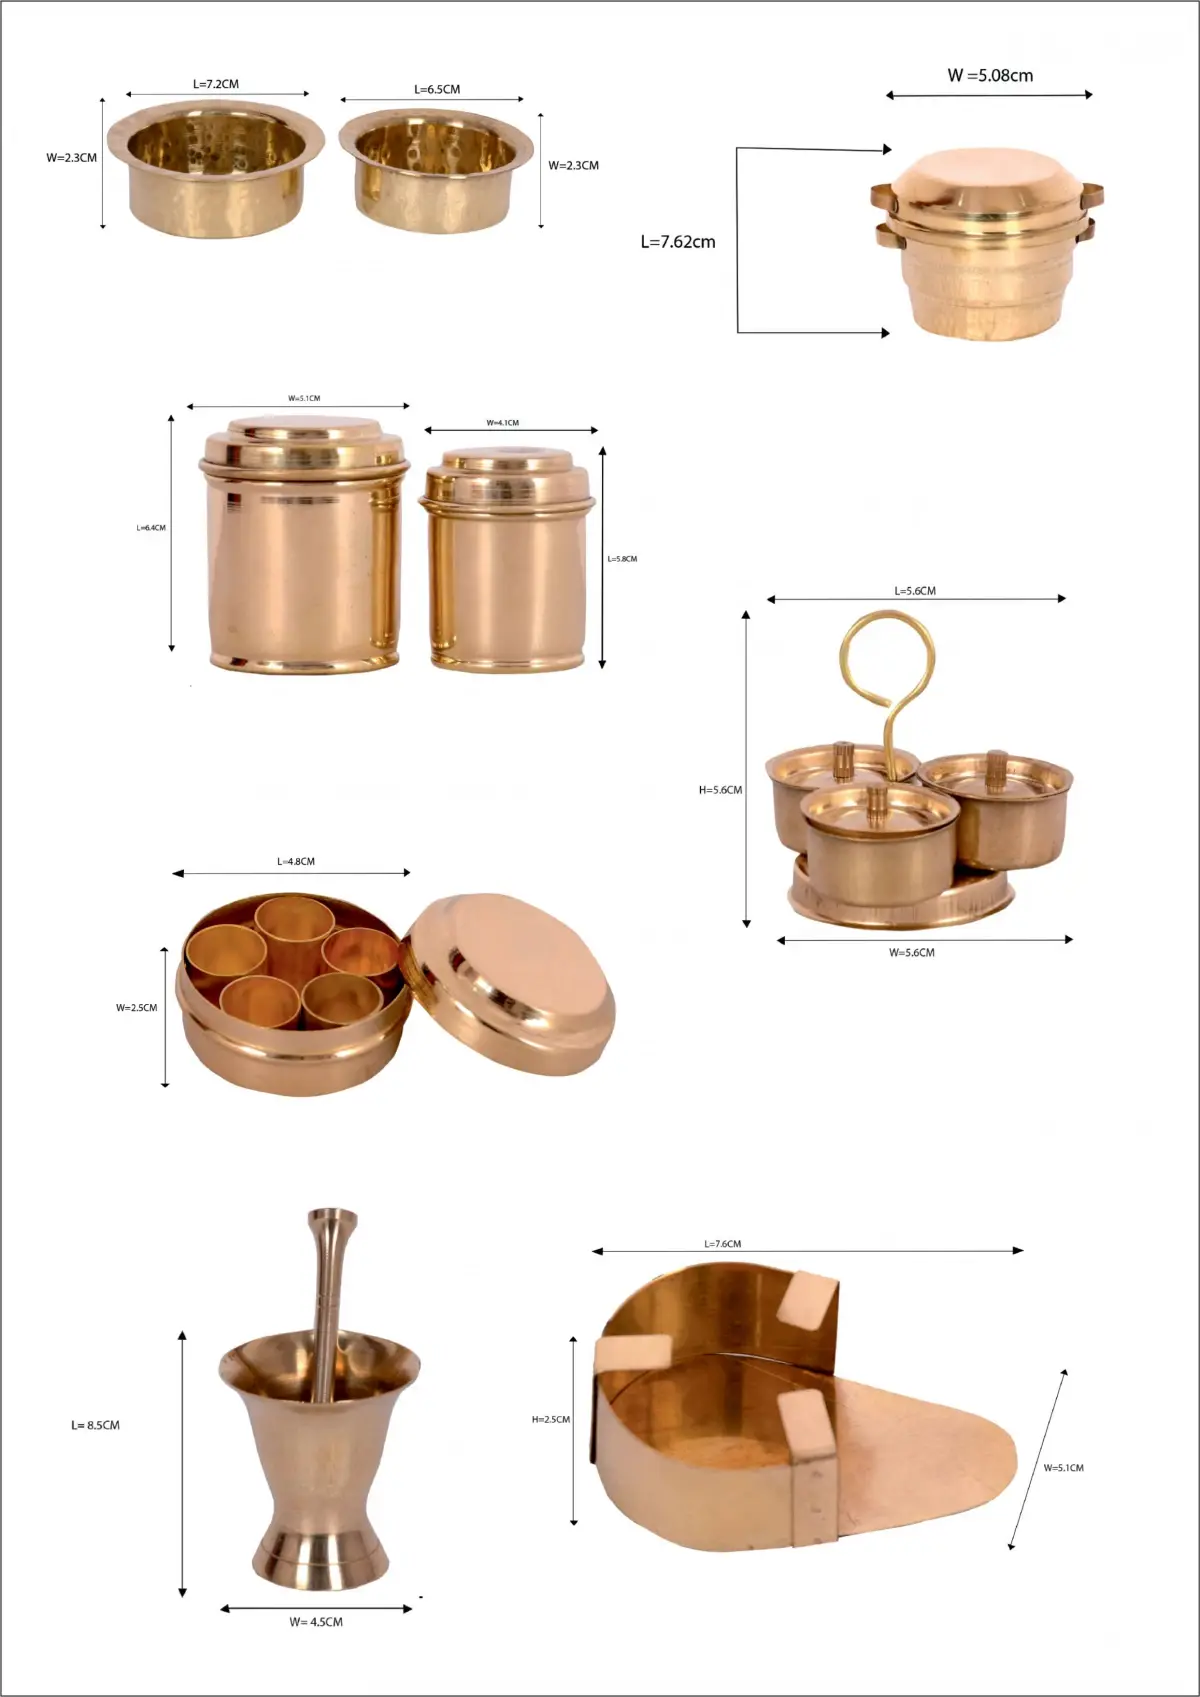 Desi Toys Premium Brass Roleplay Kitchen Set for Kids age 5Y+ (Golden)